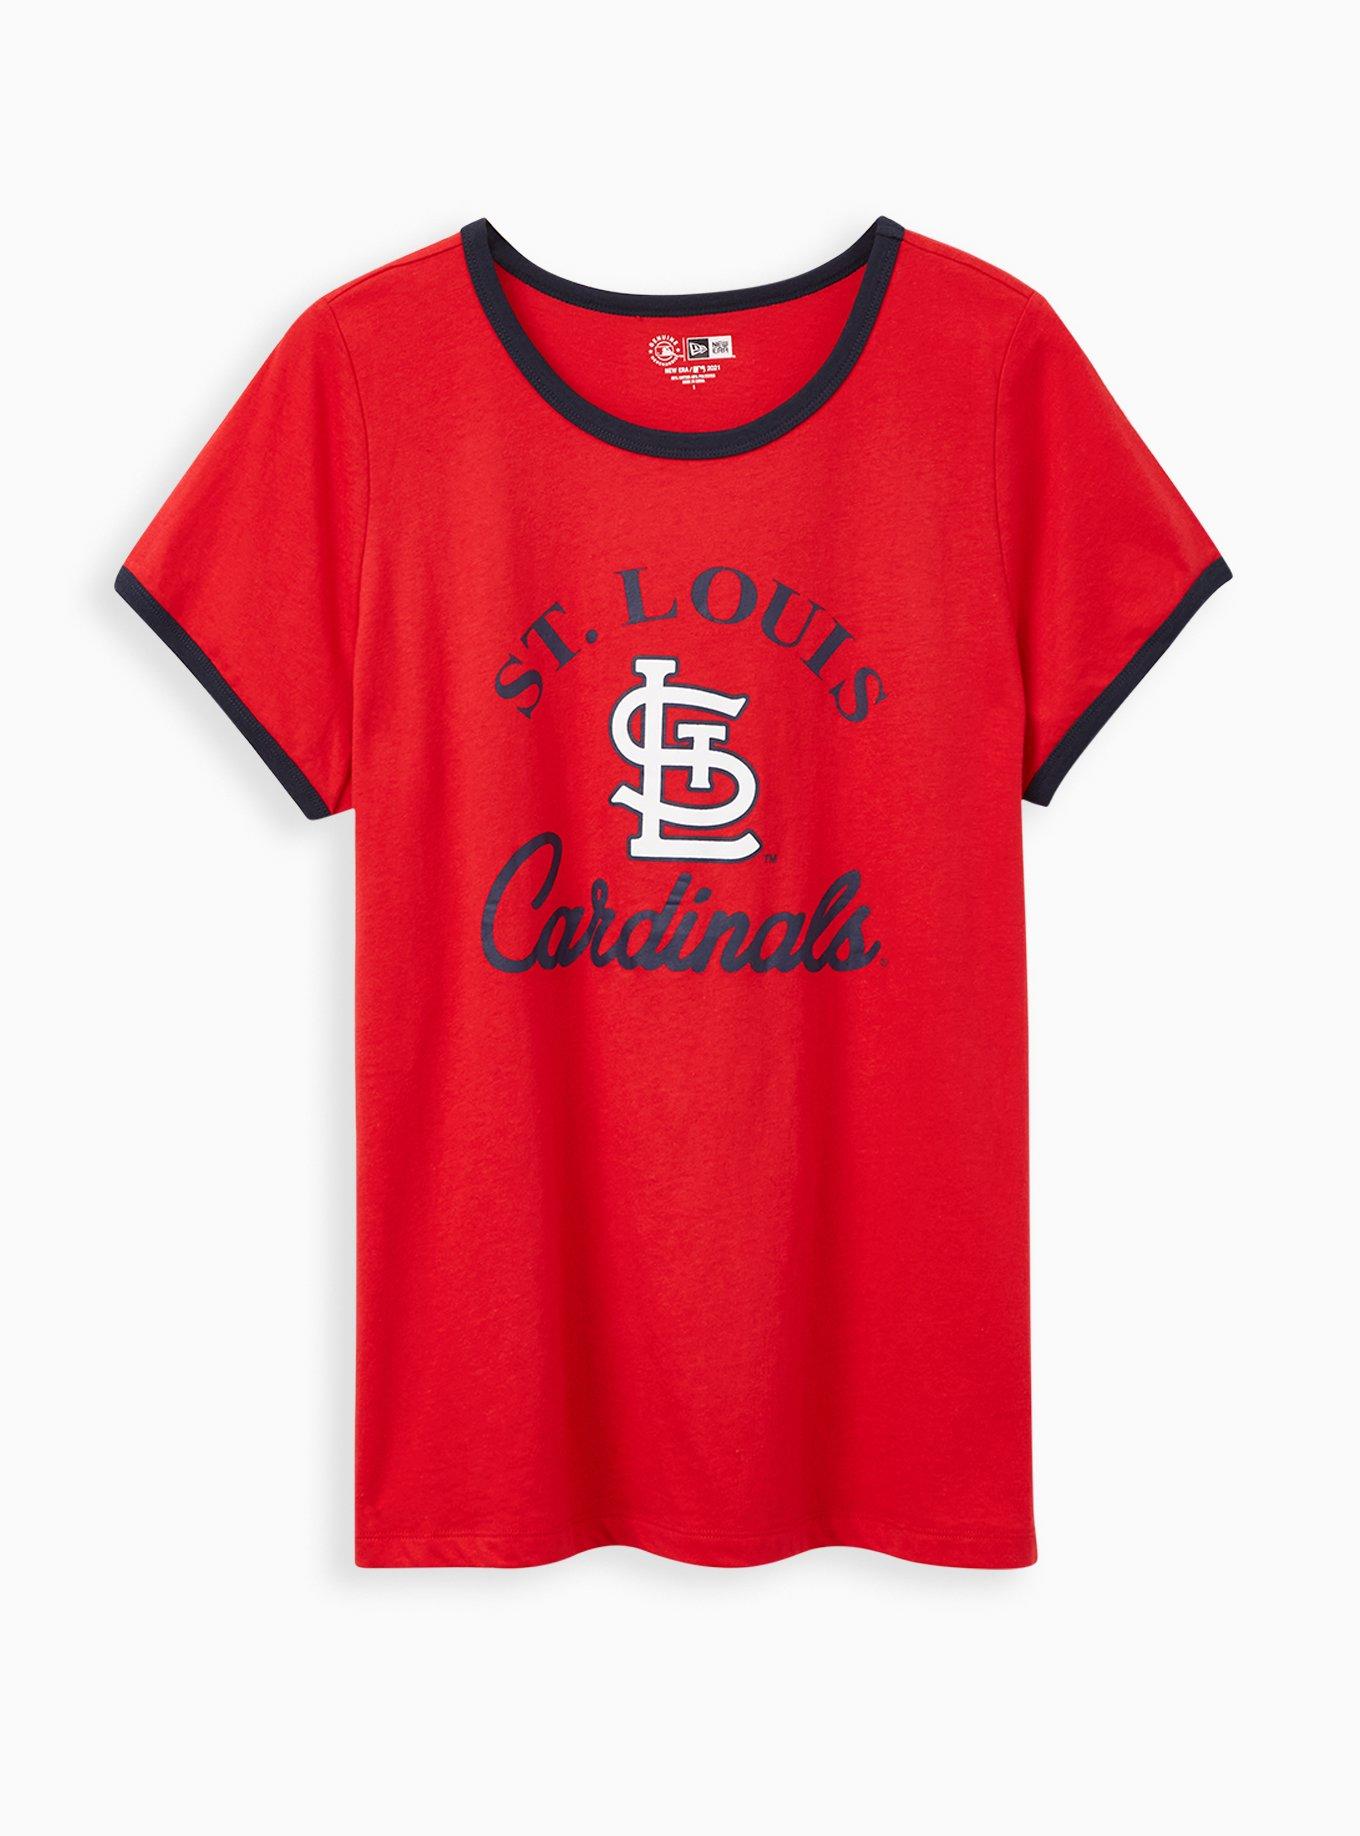 St. Louis Cardinals I Love Watching With Grandpa Kids Toddler T-Shirt